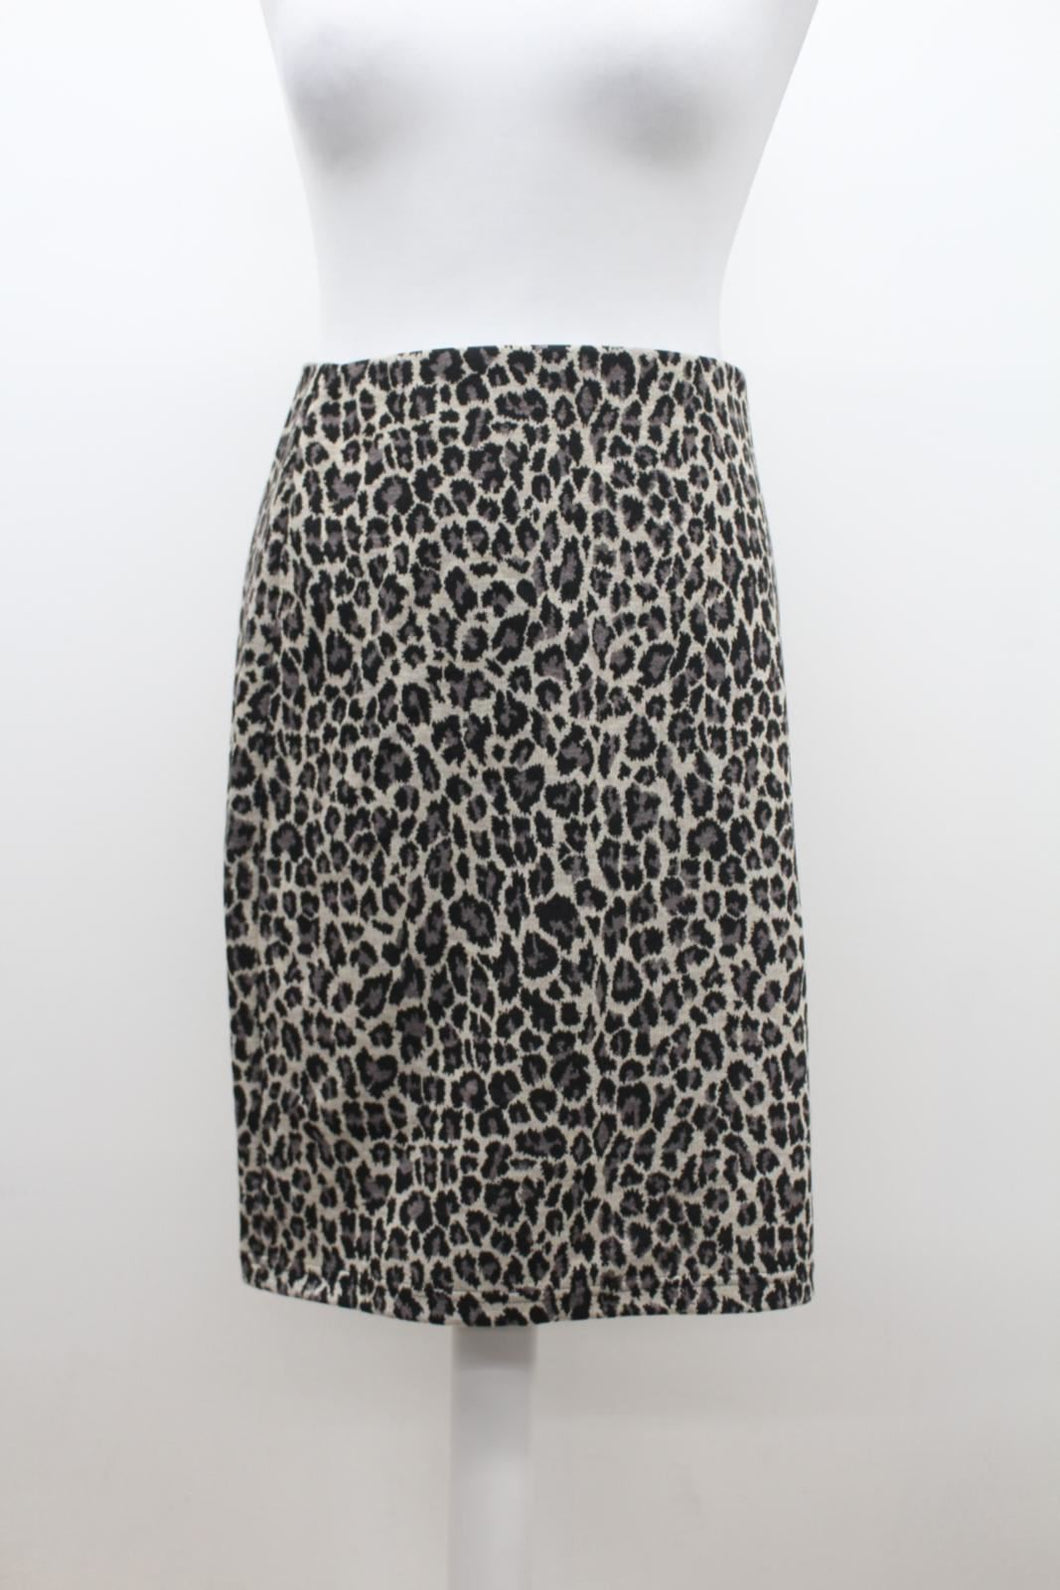 M&S Marks & Spencer Ladies Grey Animal Print Tapered Skirt UK10 RRP35 NEW